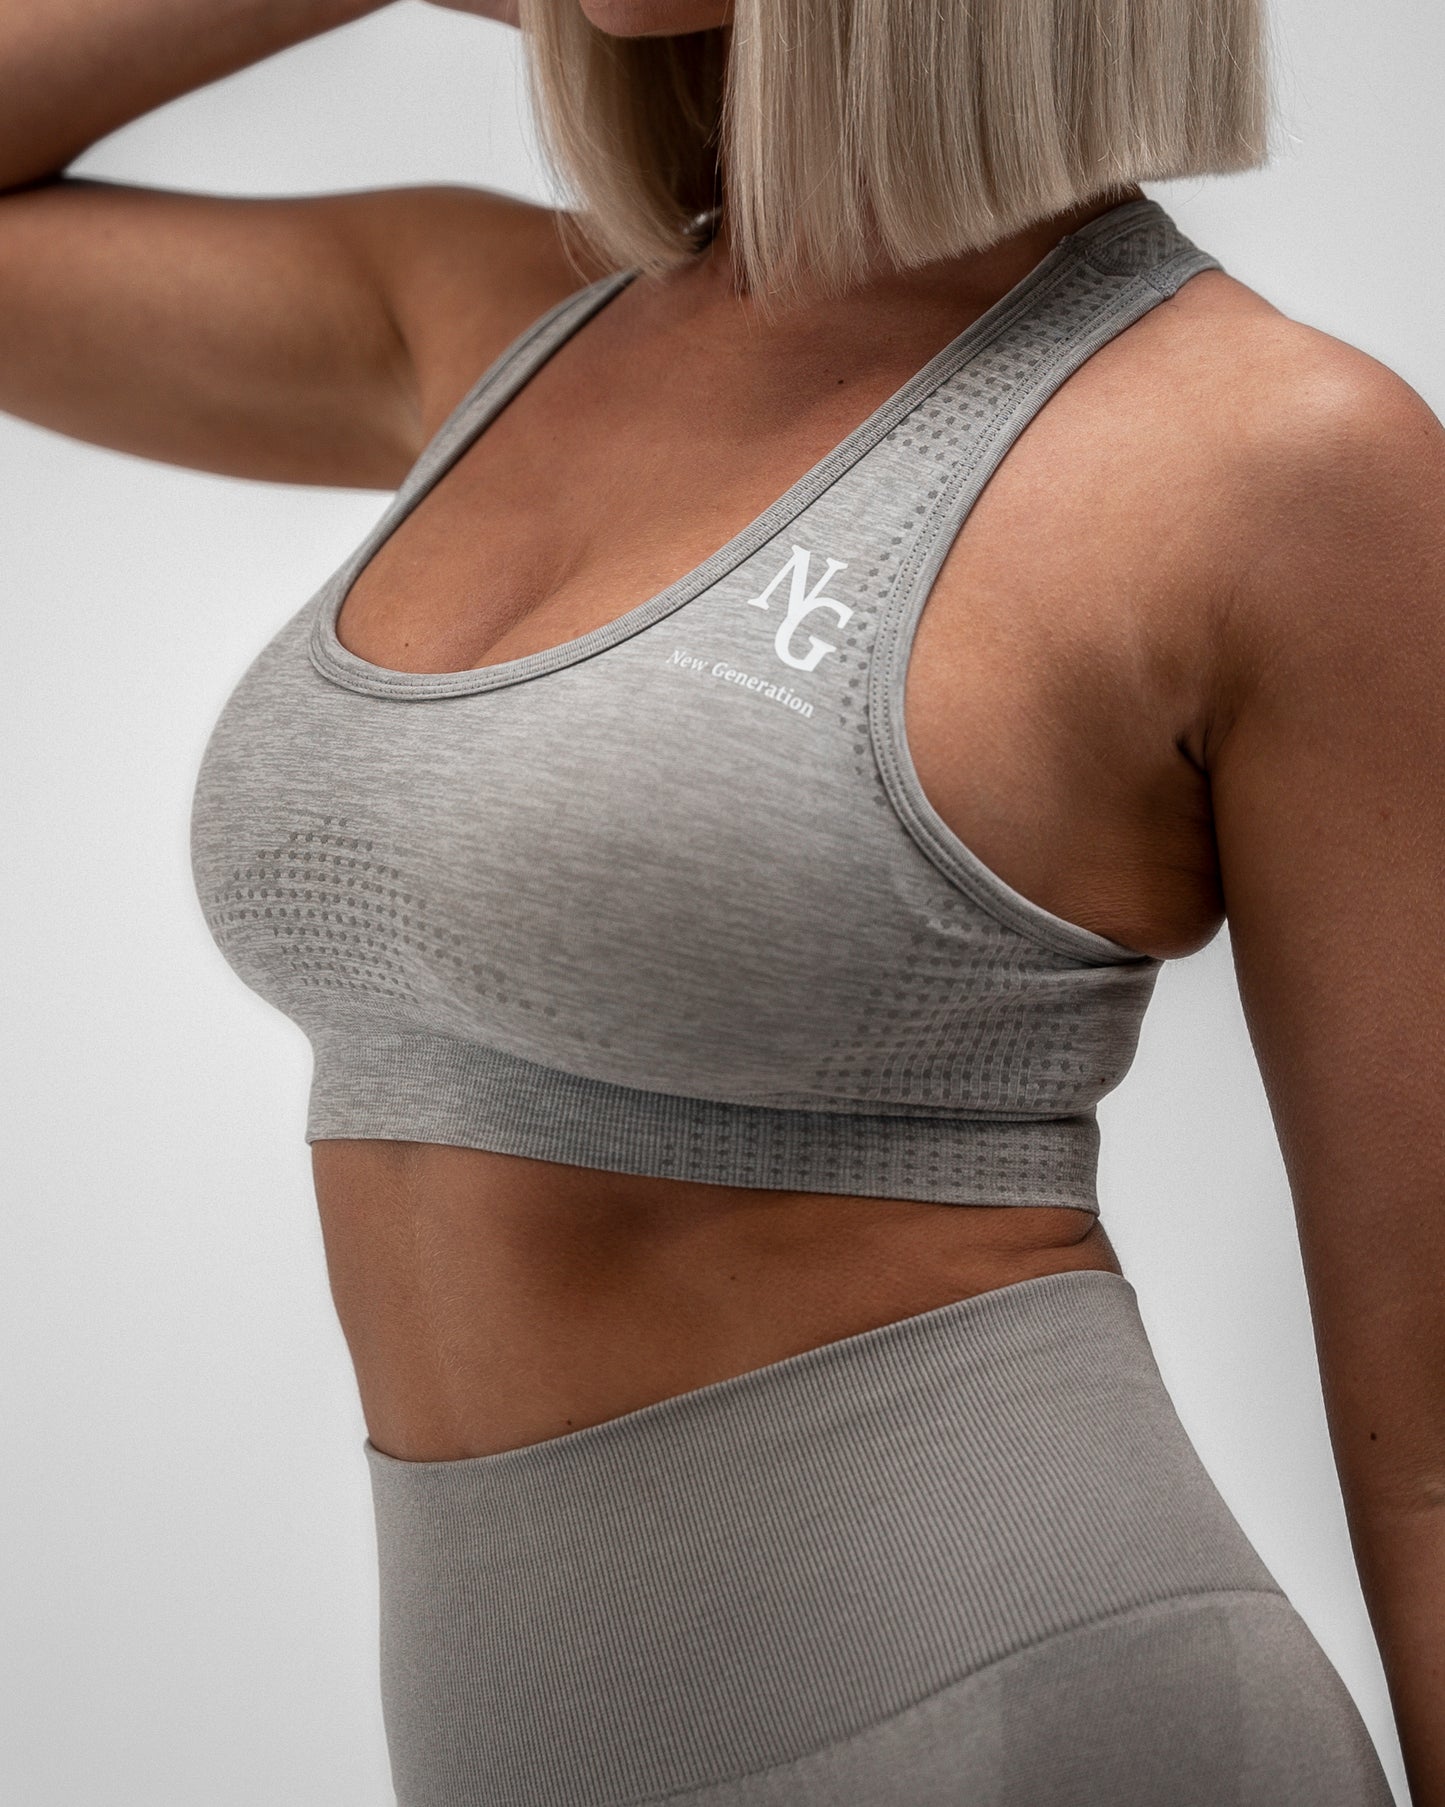 Generation 1 stone grey sports bra